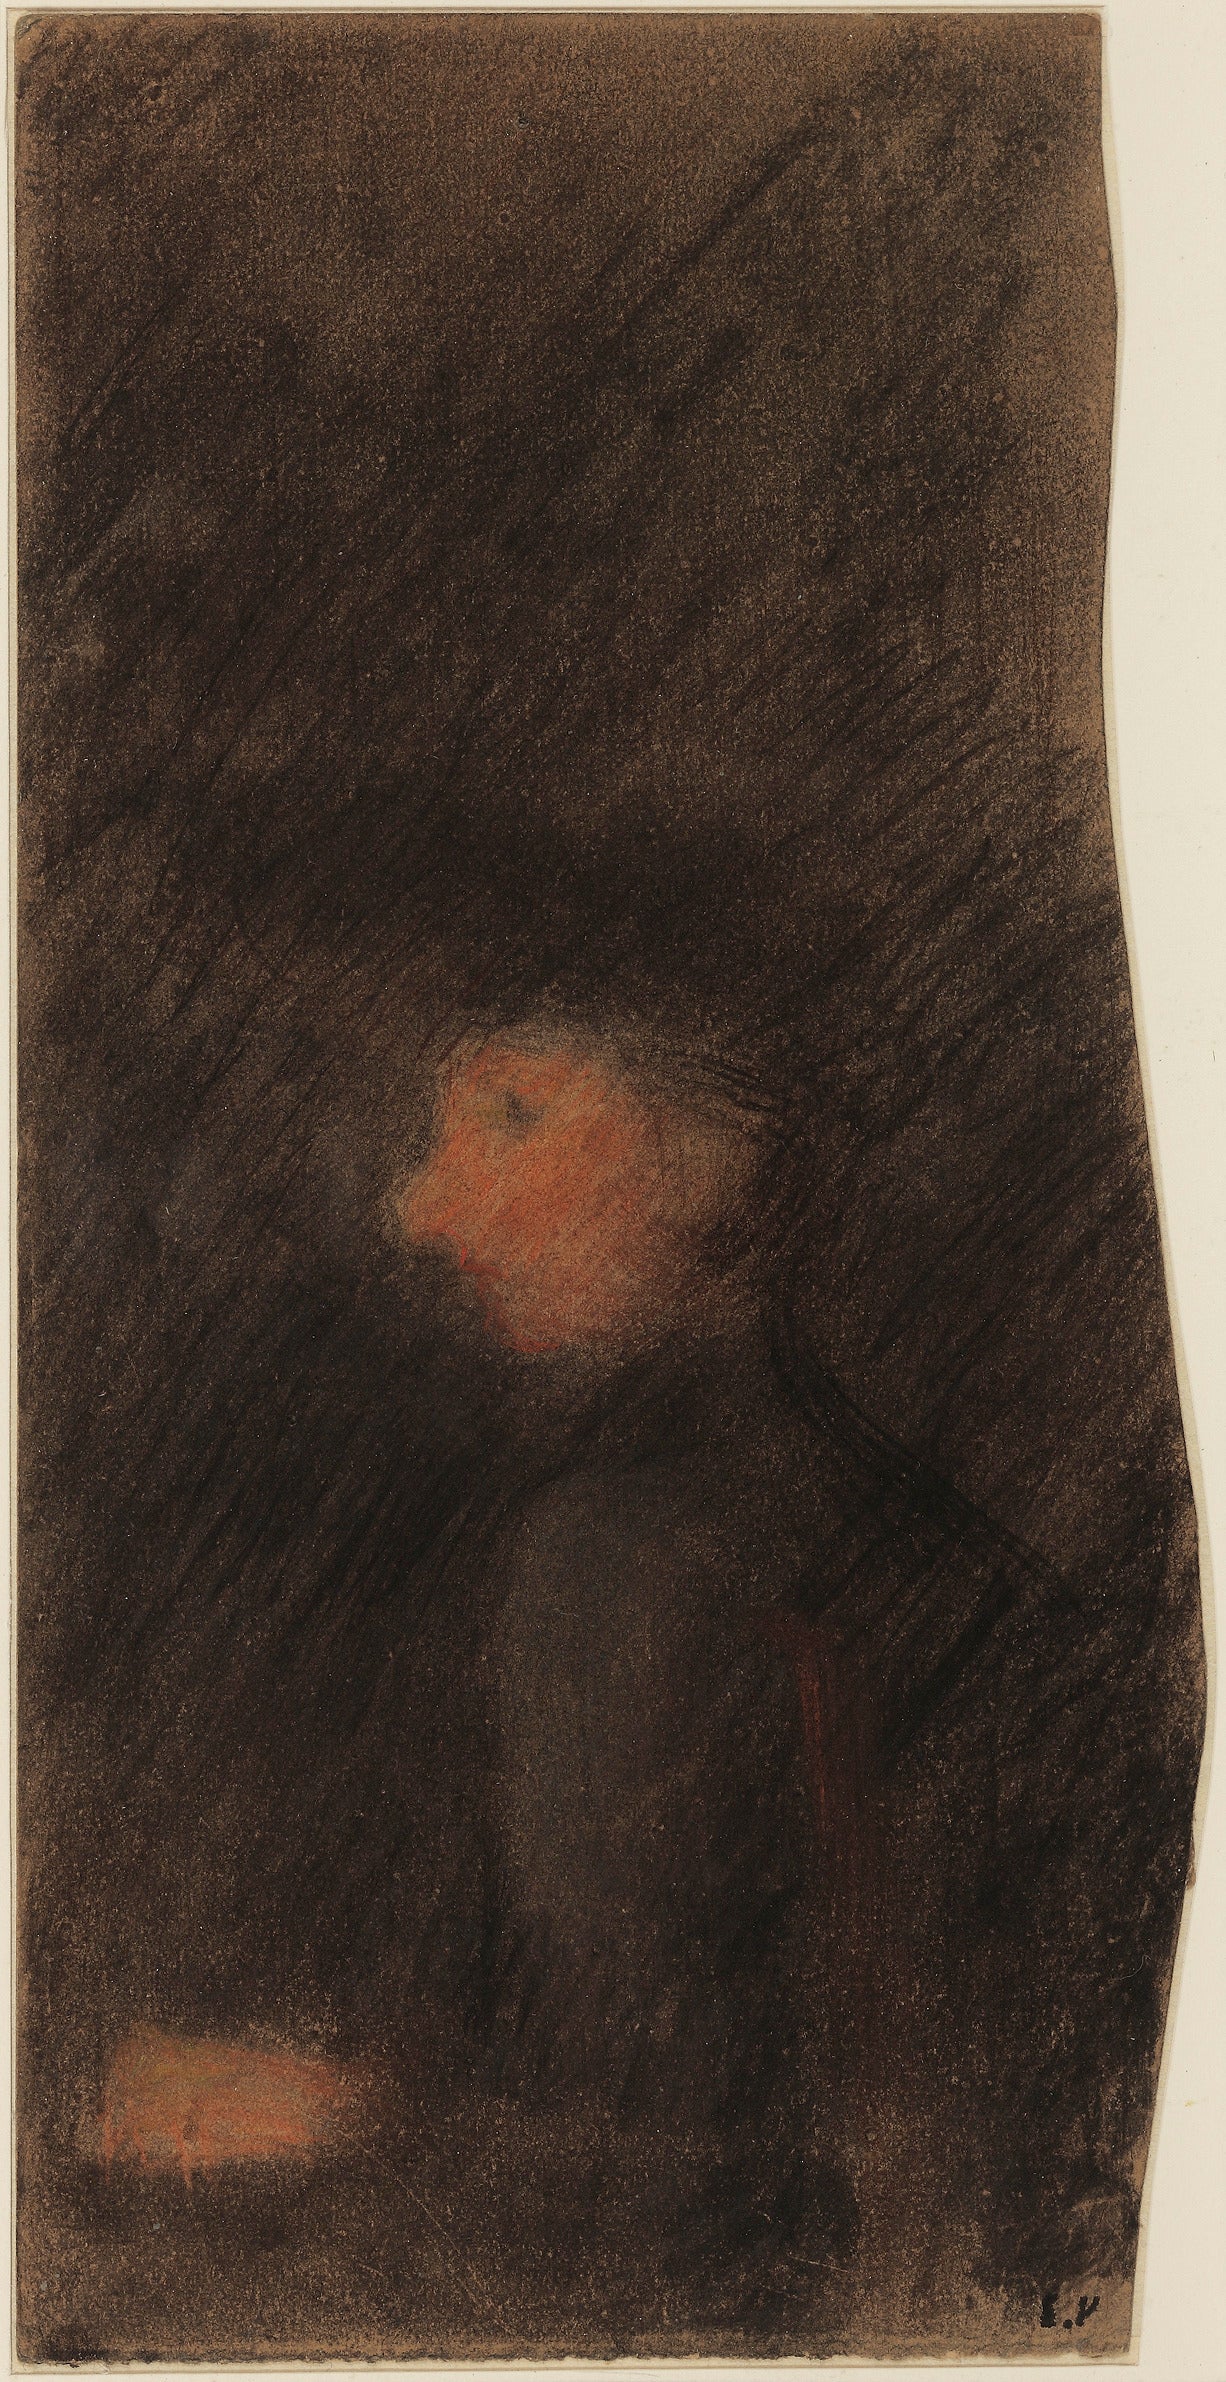 Edouard Vuillard Portrait - Woman in Profile (Profil de femme)